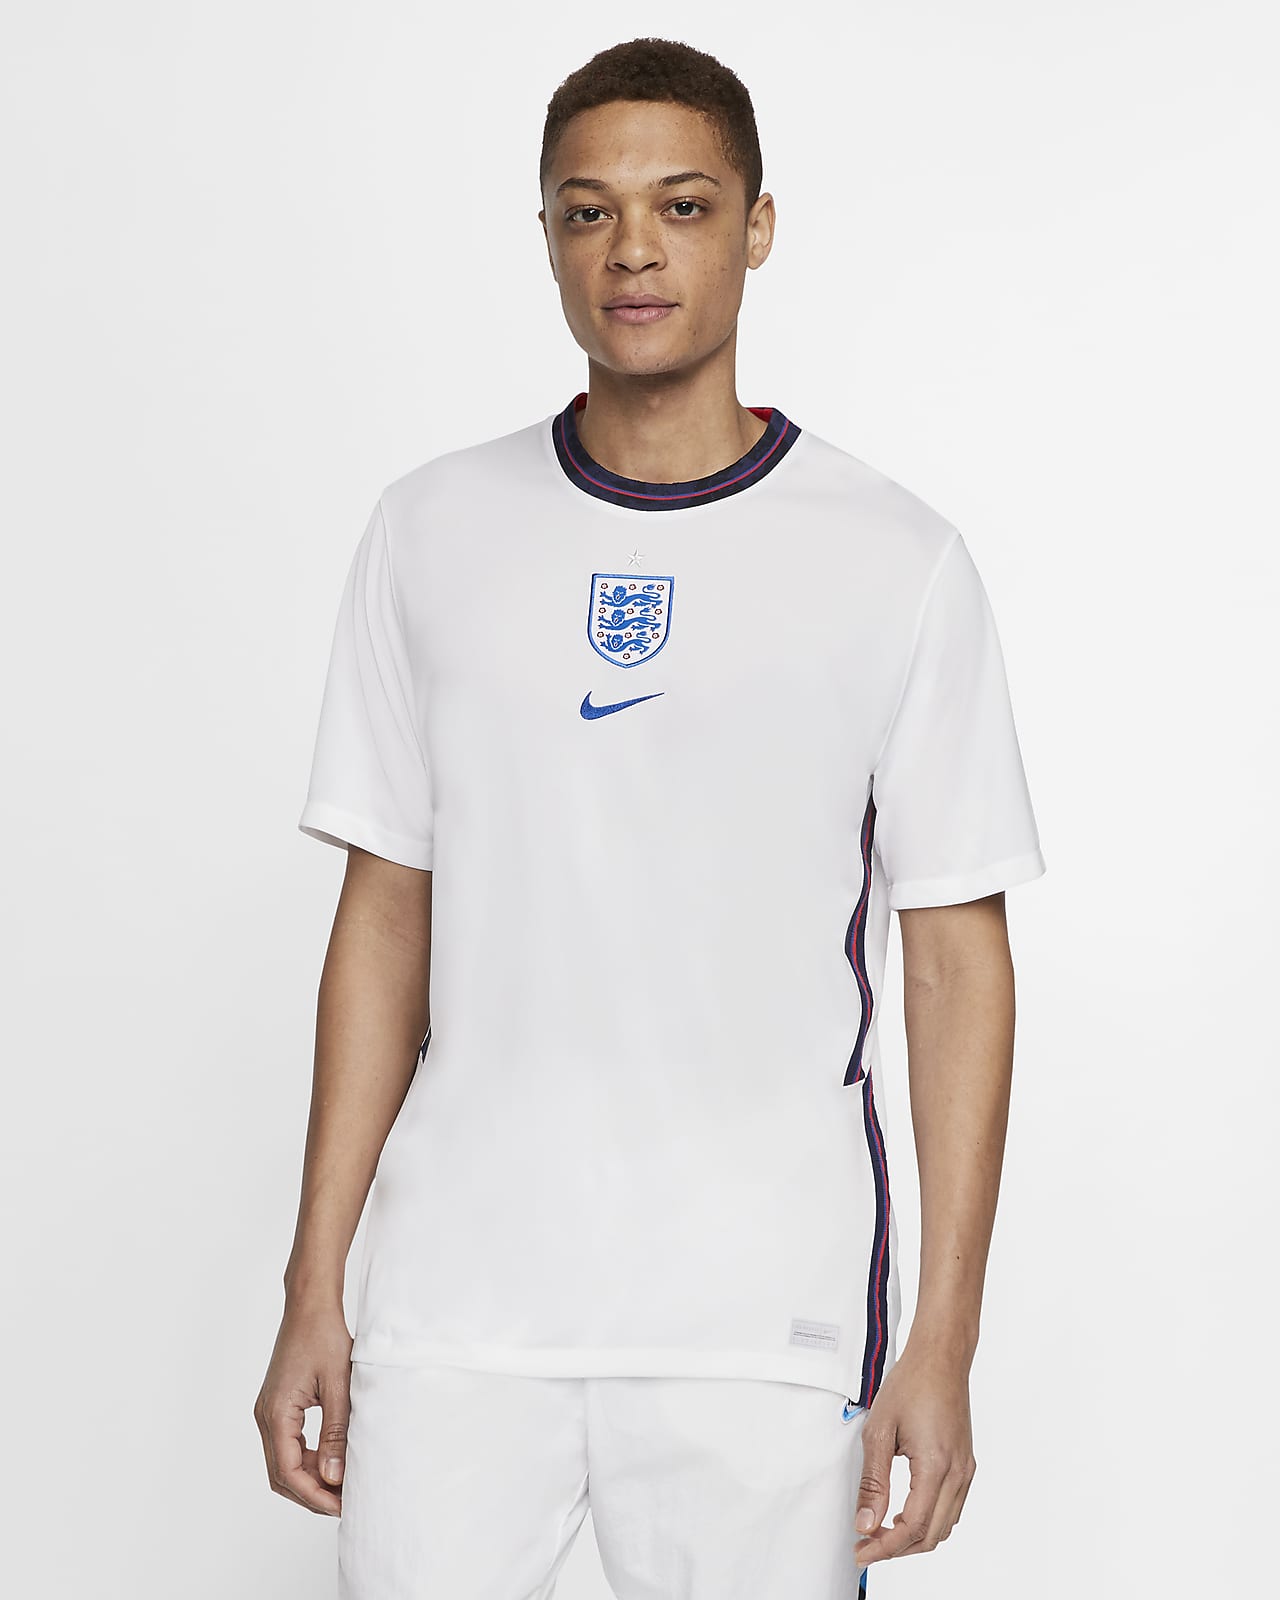 Unisex Adults Customisable England Style Home Football Shirt